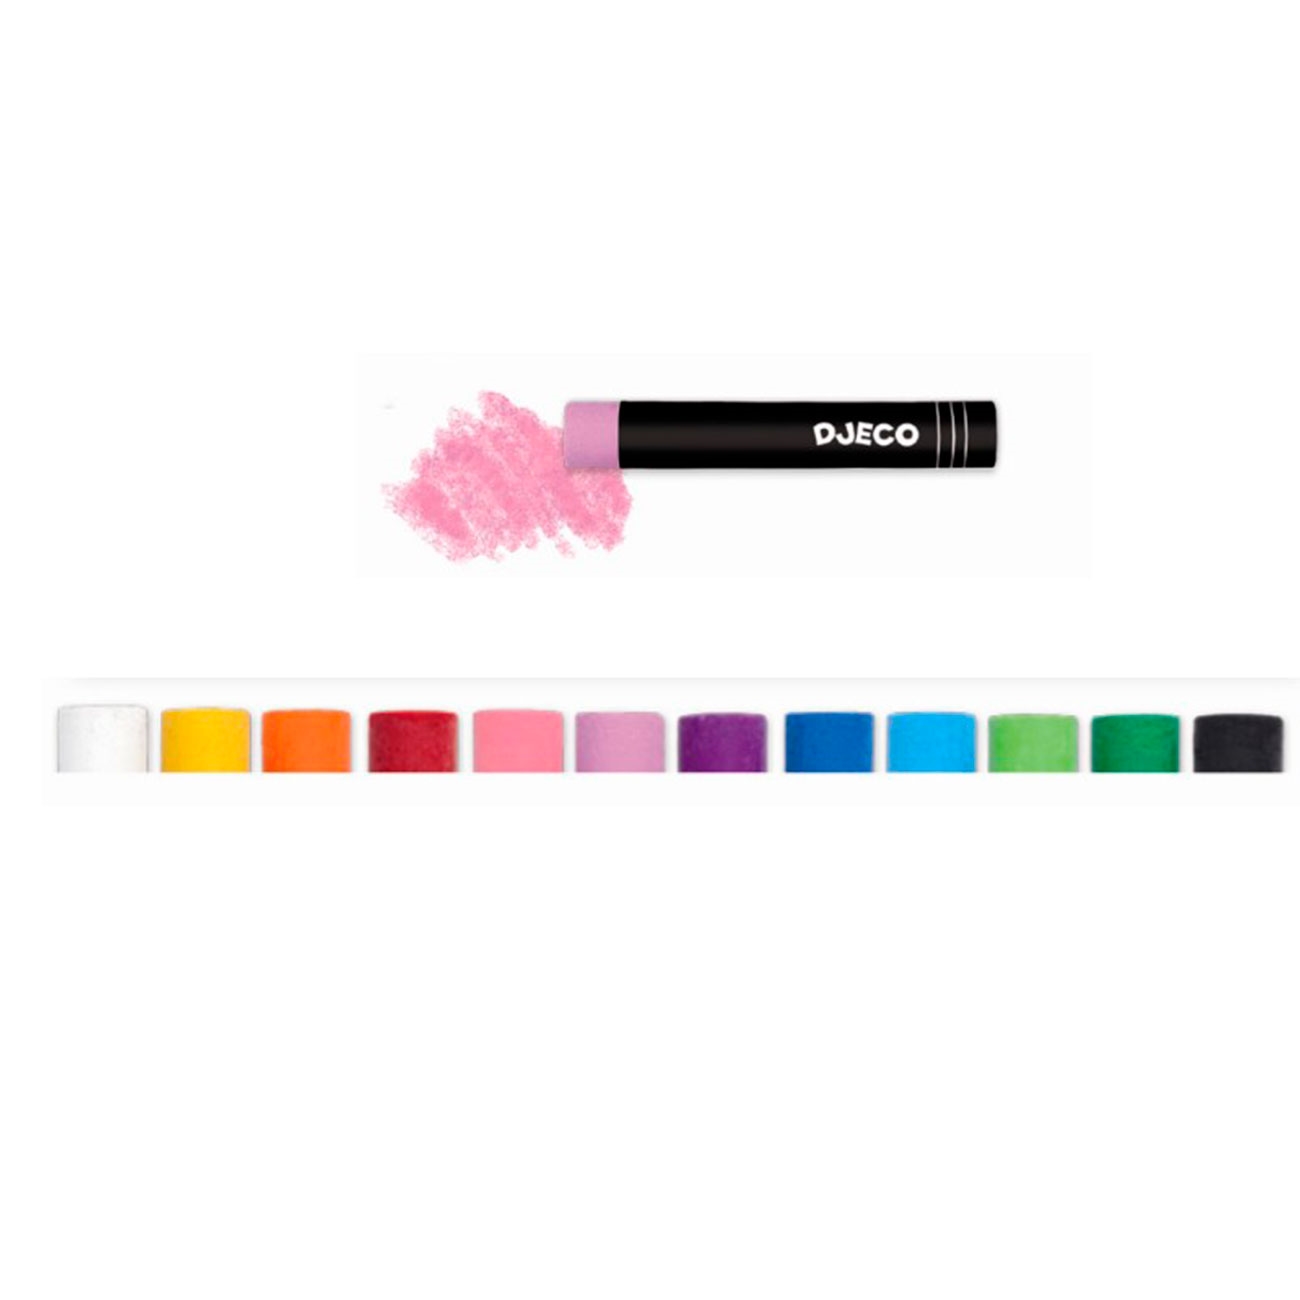 djeco-farver-colours-oliekridt-oil-pastels-dj09748-2-p